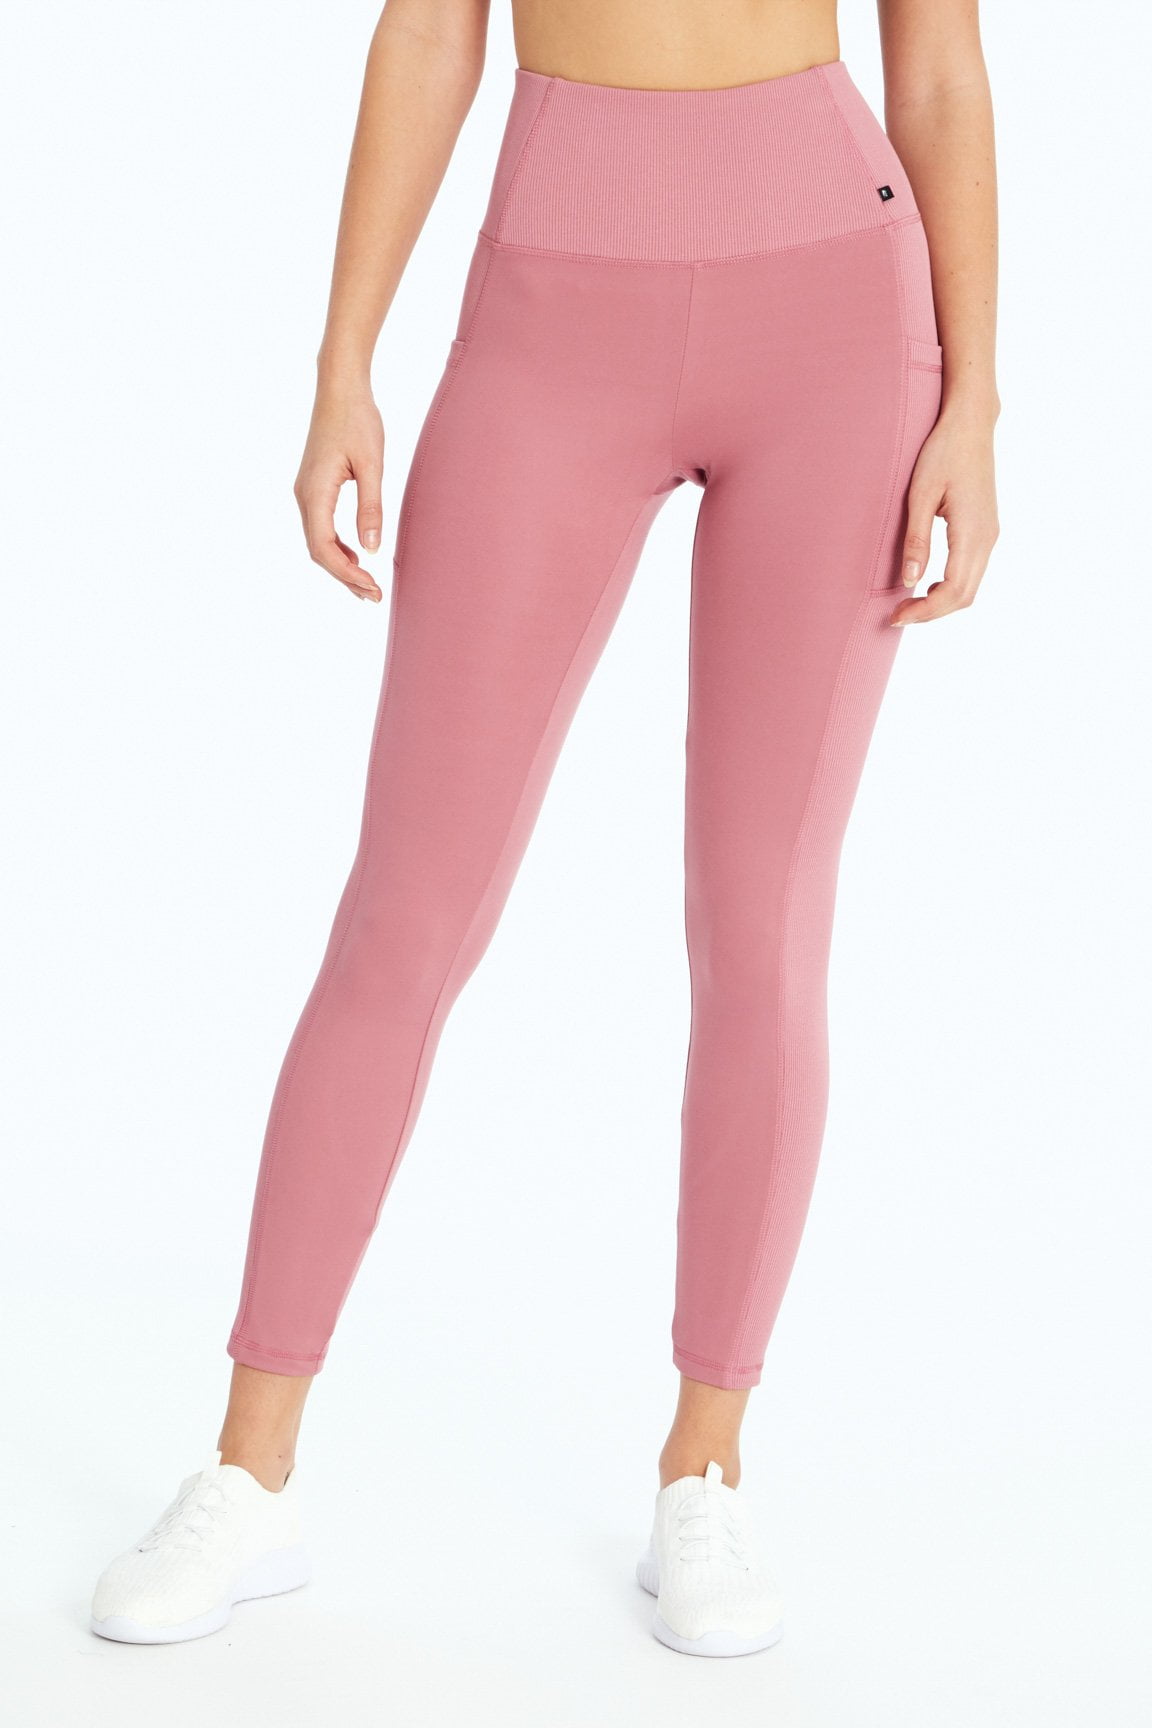 Ettie H Baby Girls Ribbed Rose Pink Cotton Pants Leggings Size 3-6M NWT |  eBay